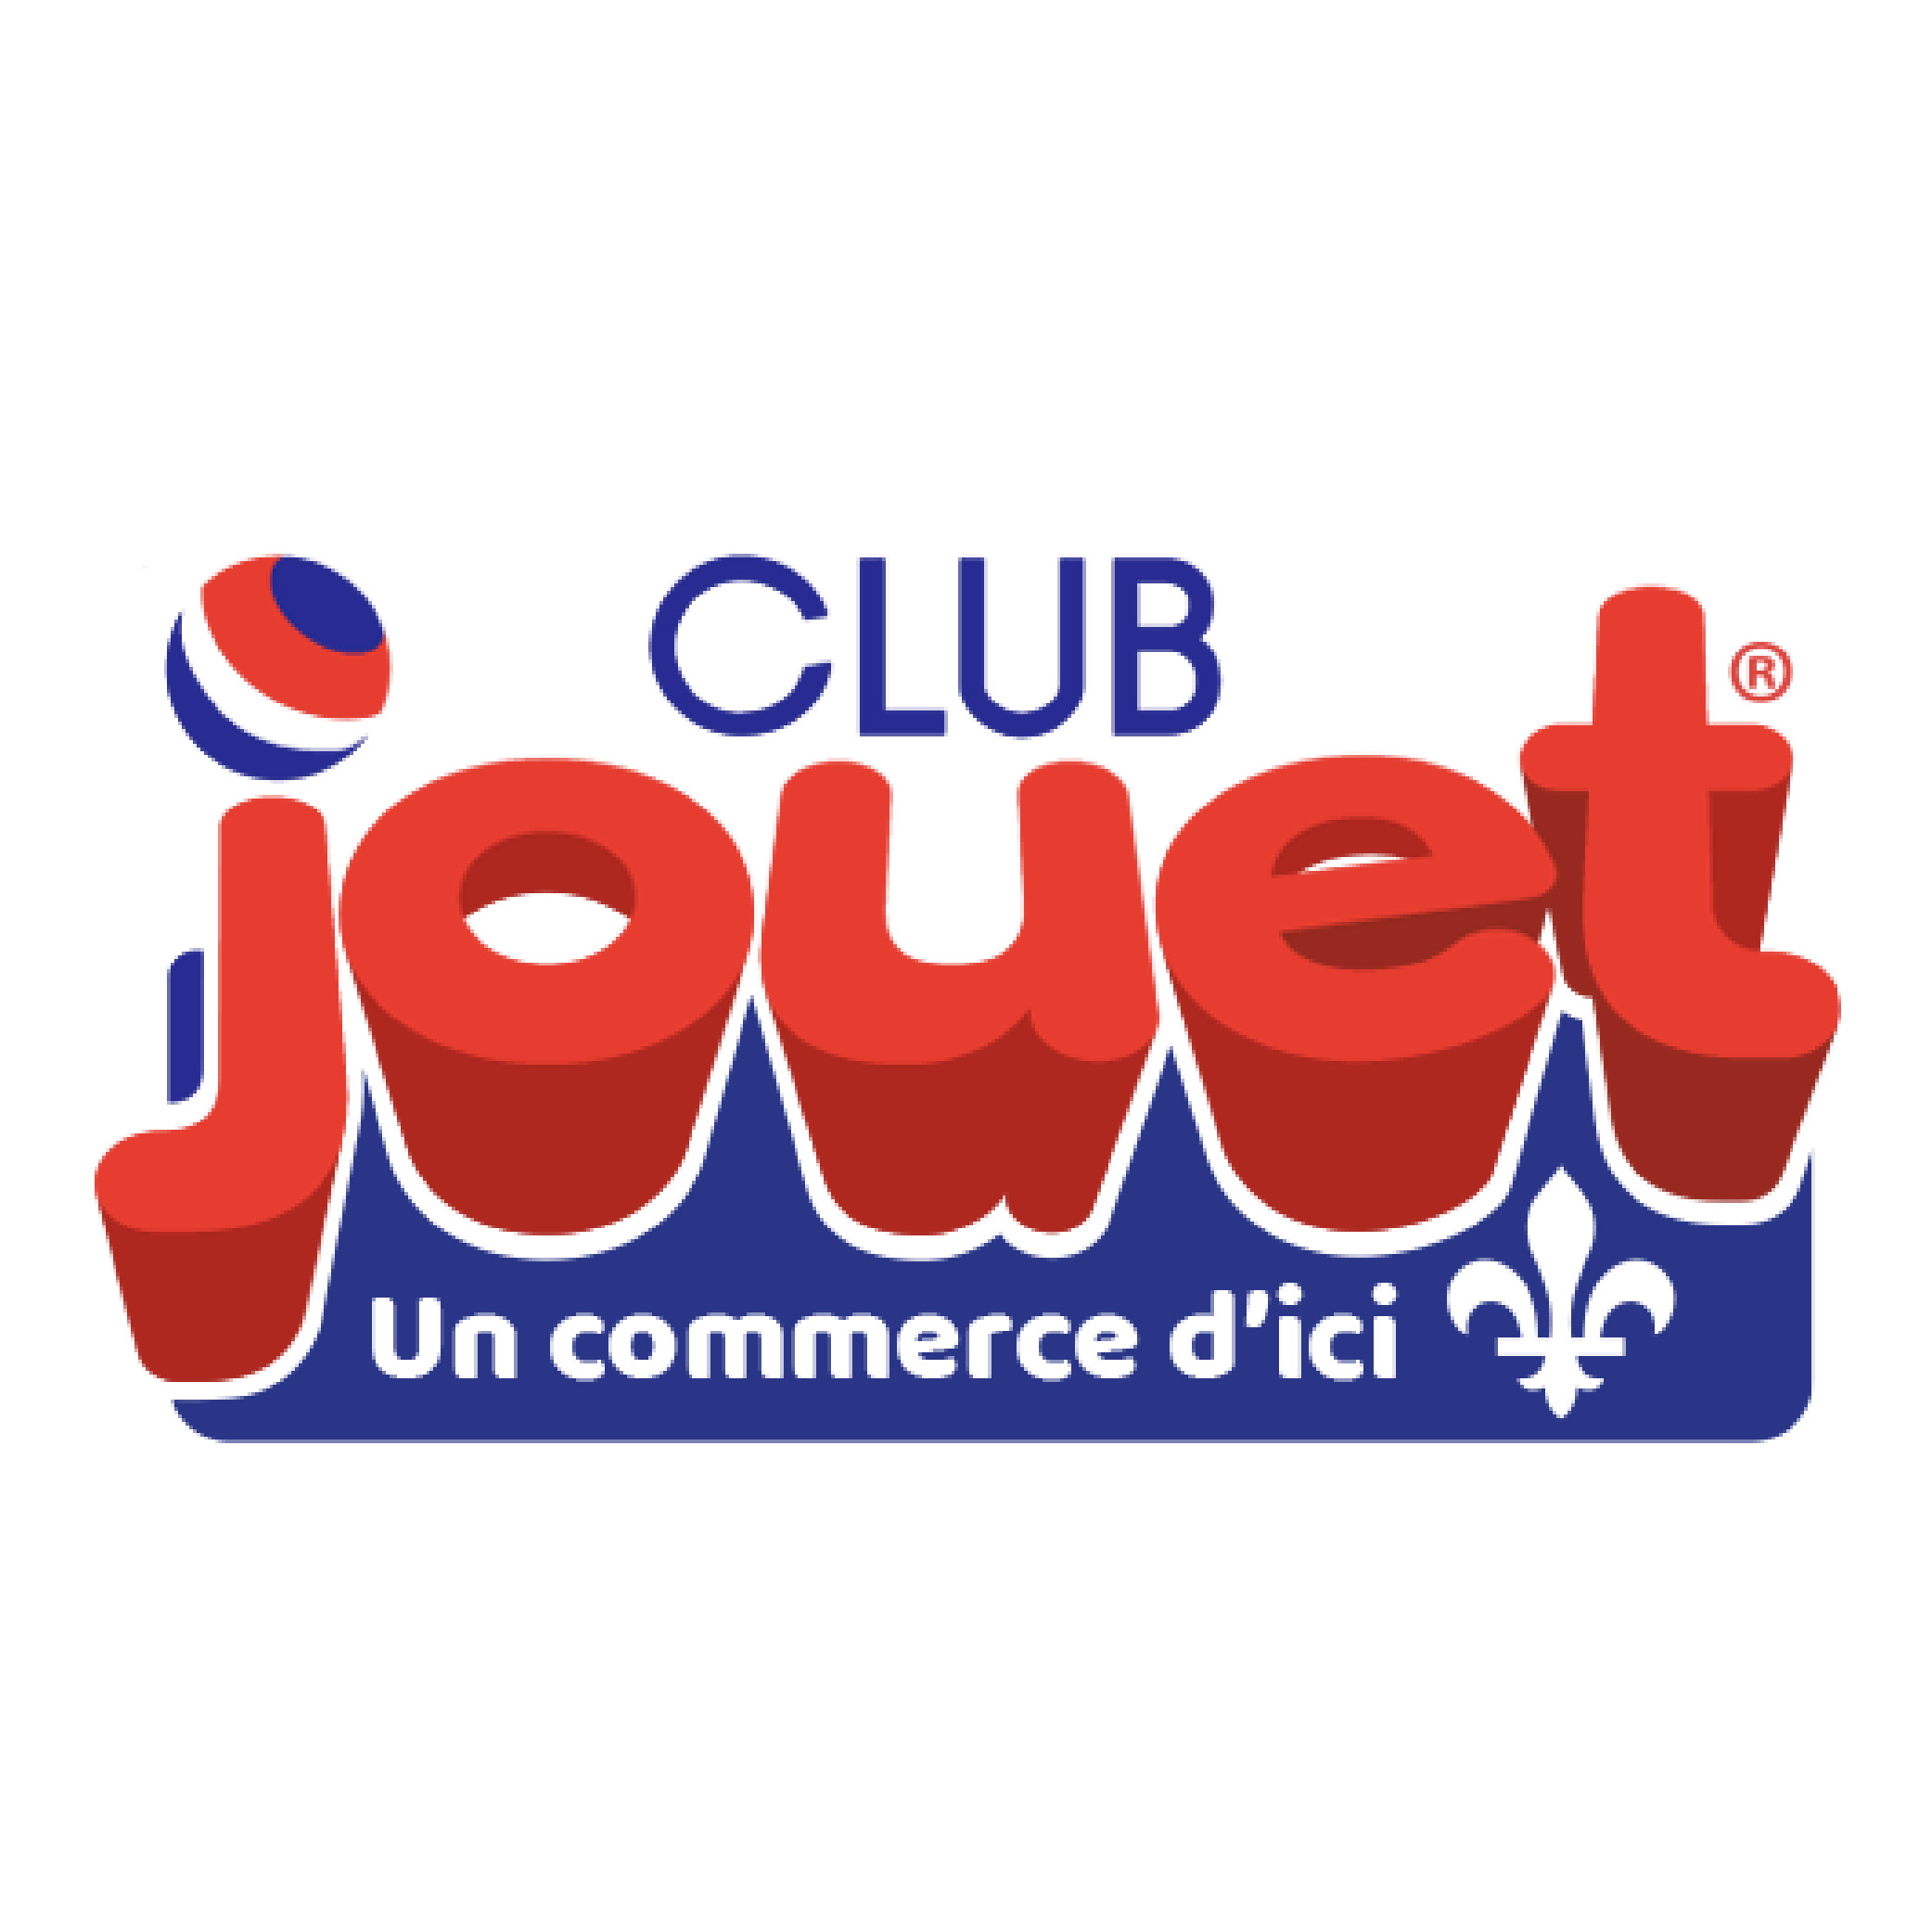 Club Jouet